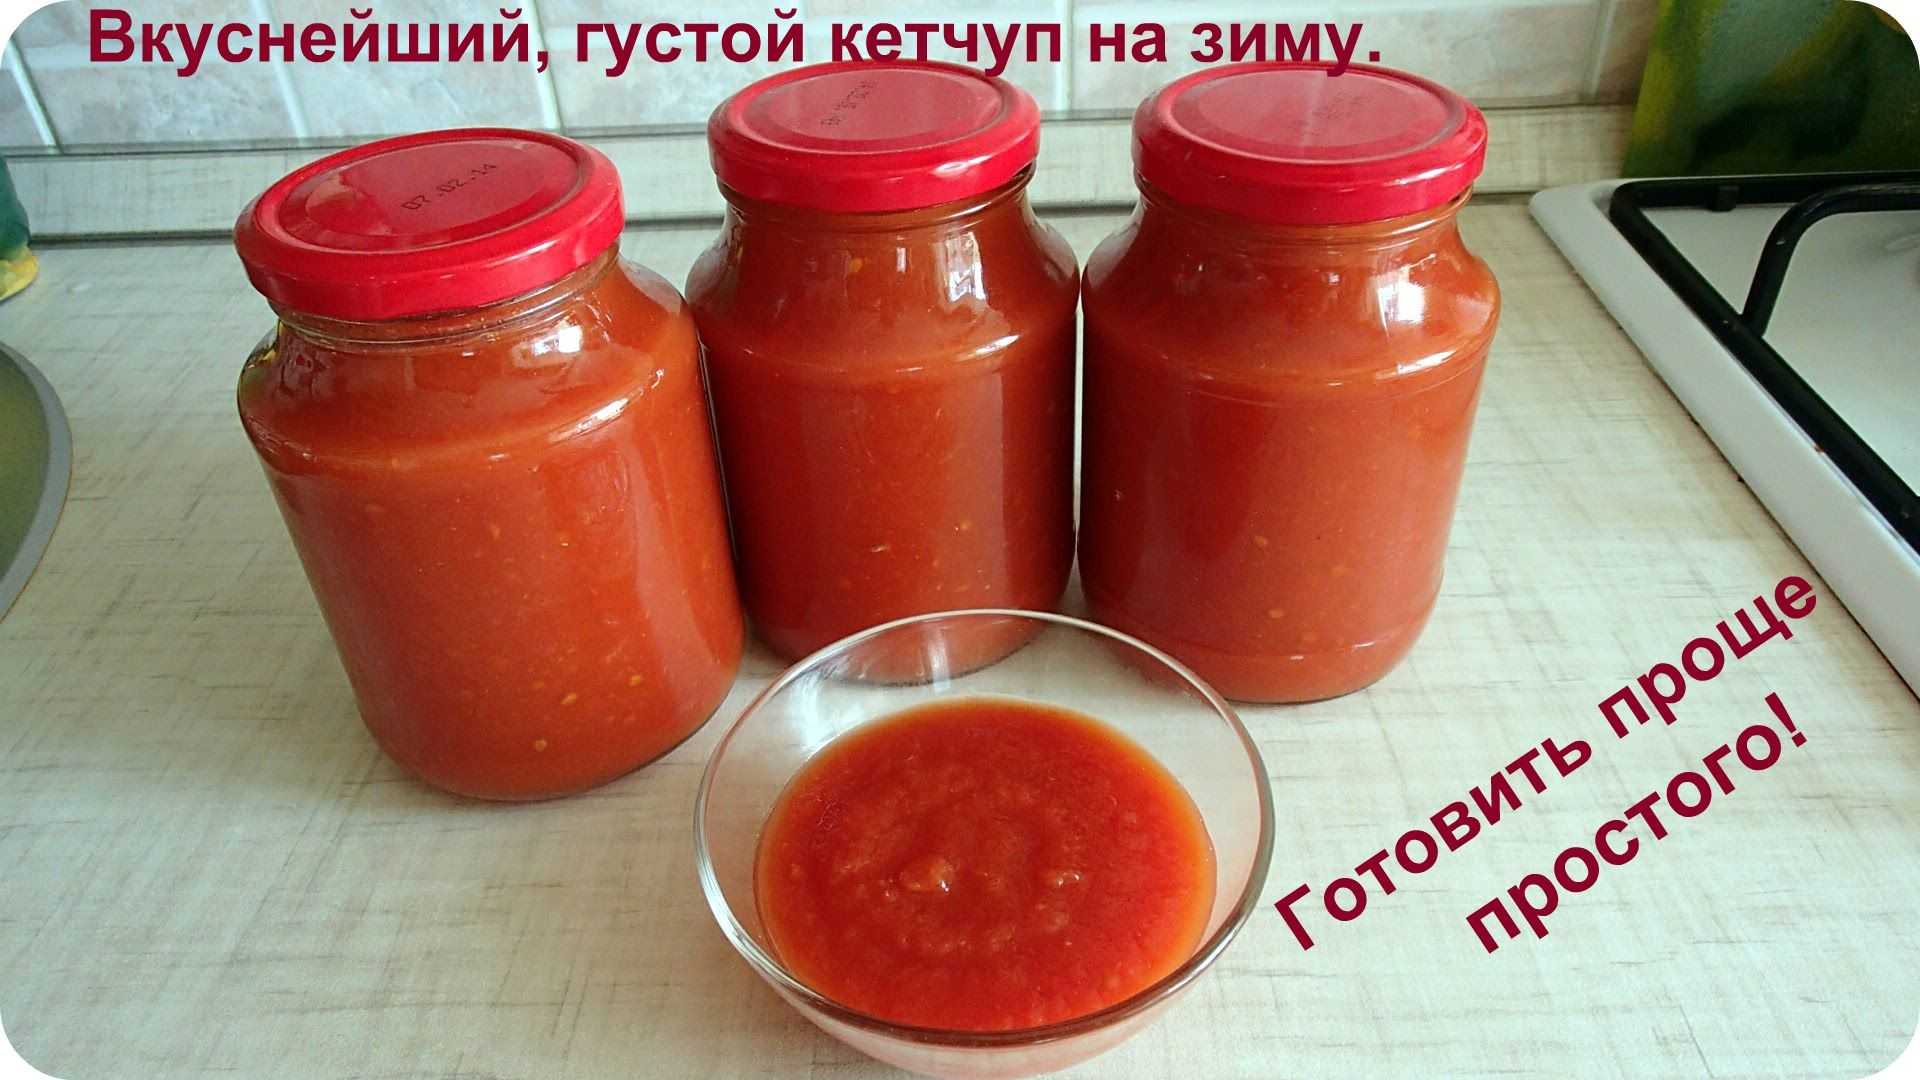 Кетчуп на зиму из помидор в домашних